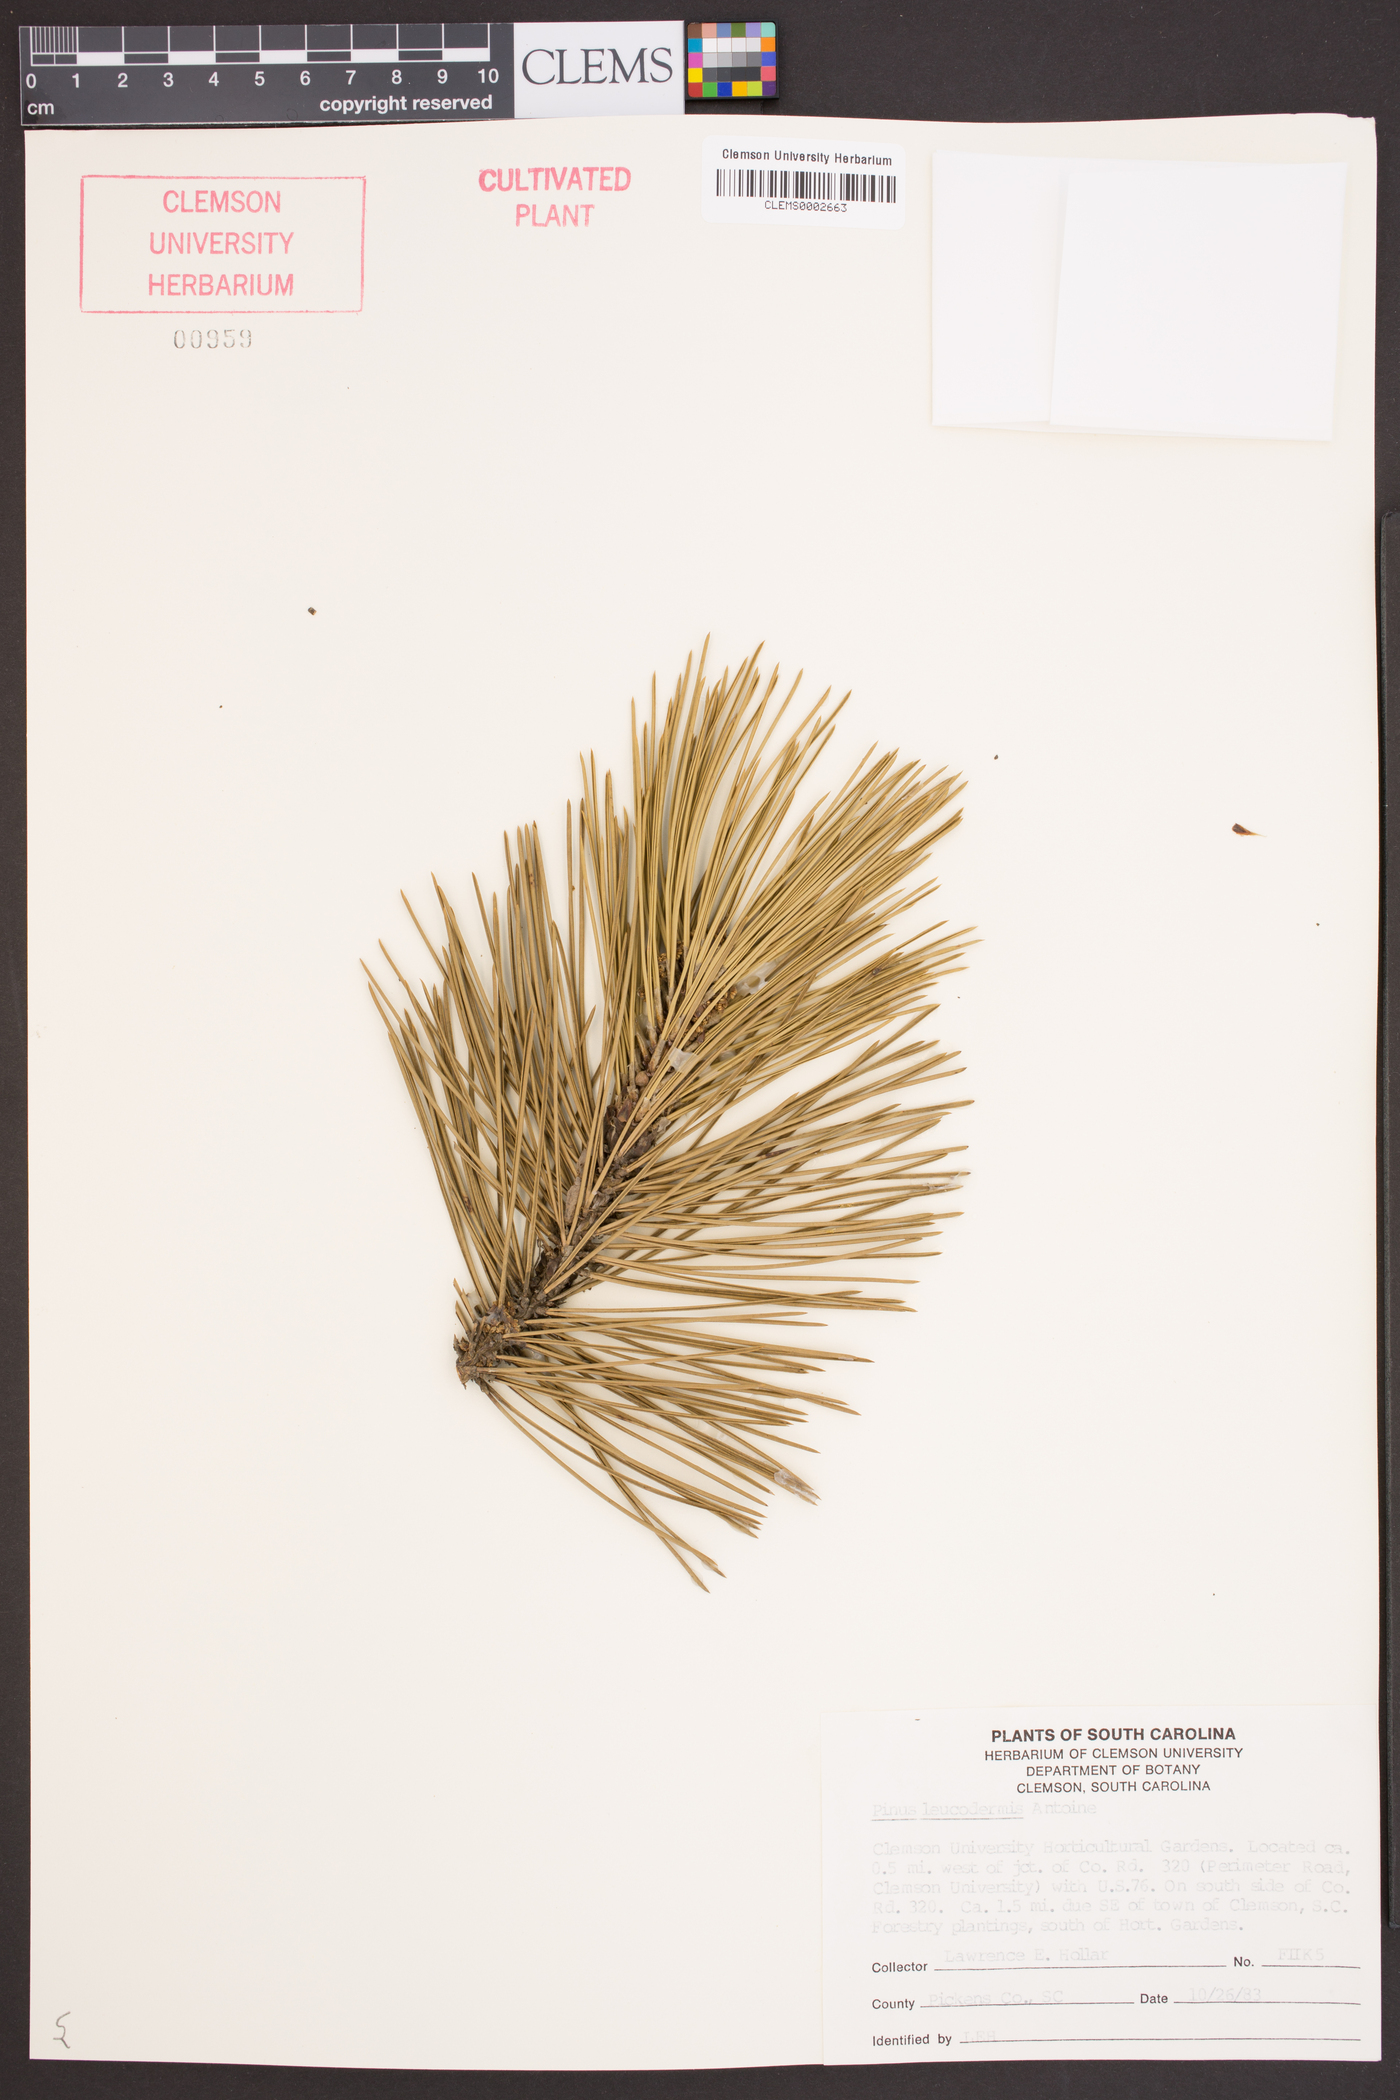 Pinus leucodermis image